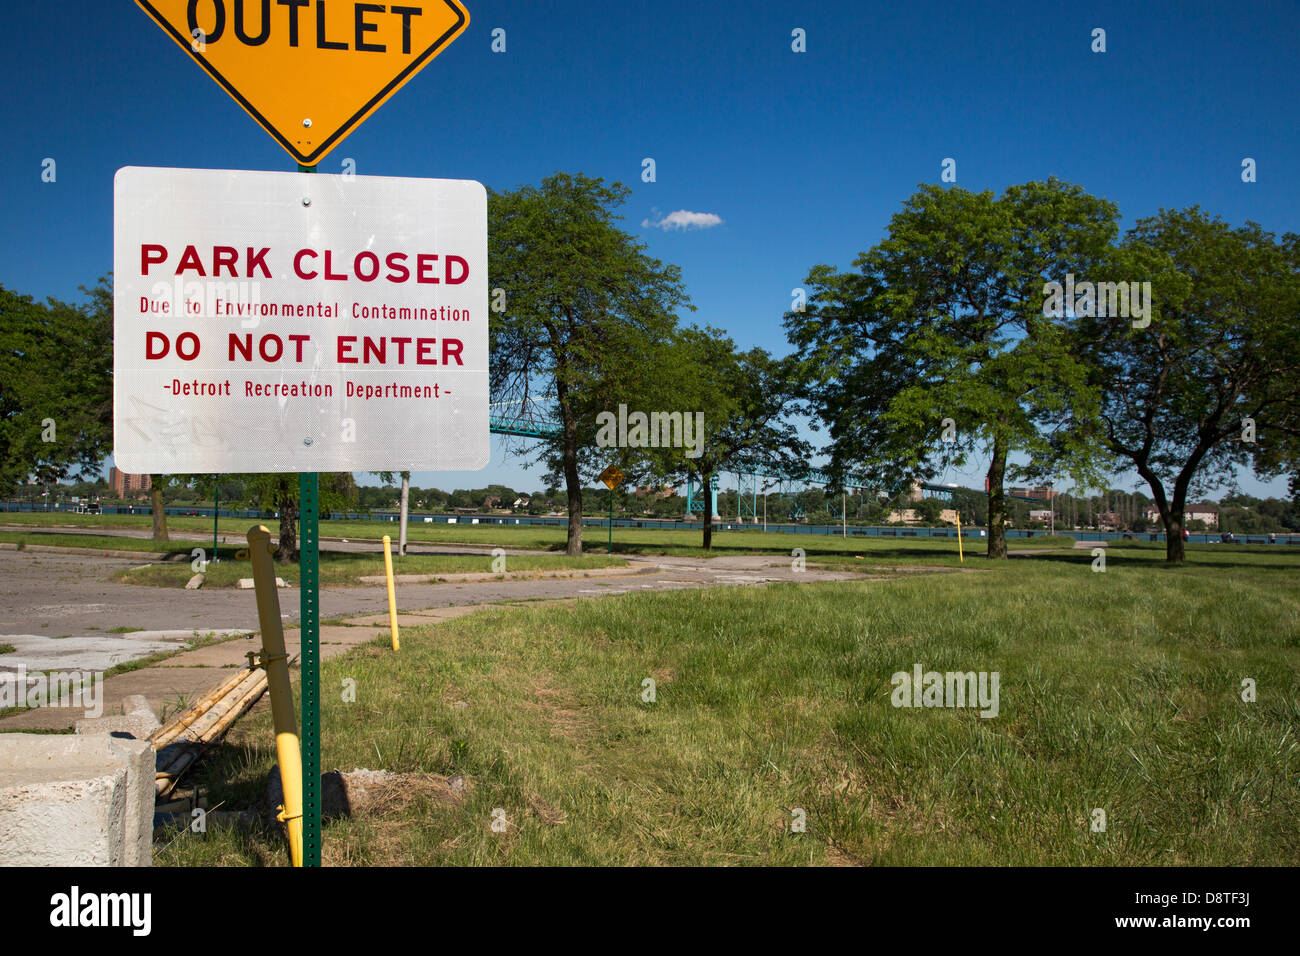 City Park Closed Due to Environmental Contamination Stock Photo